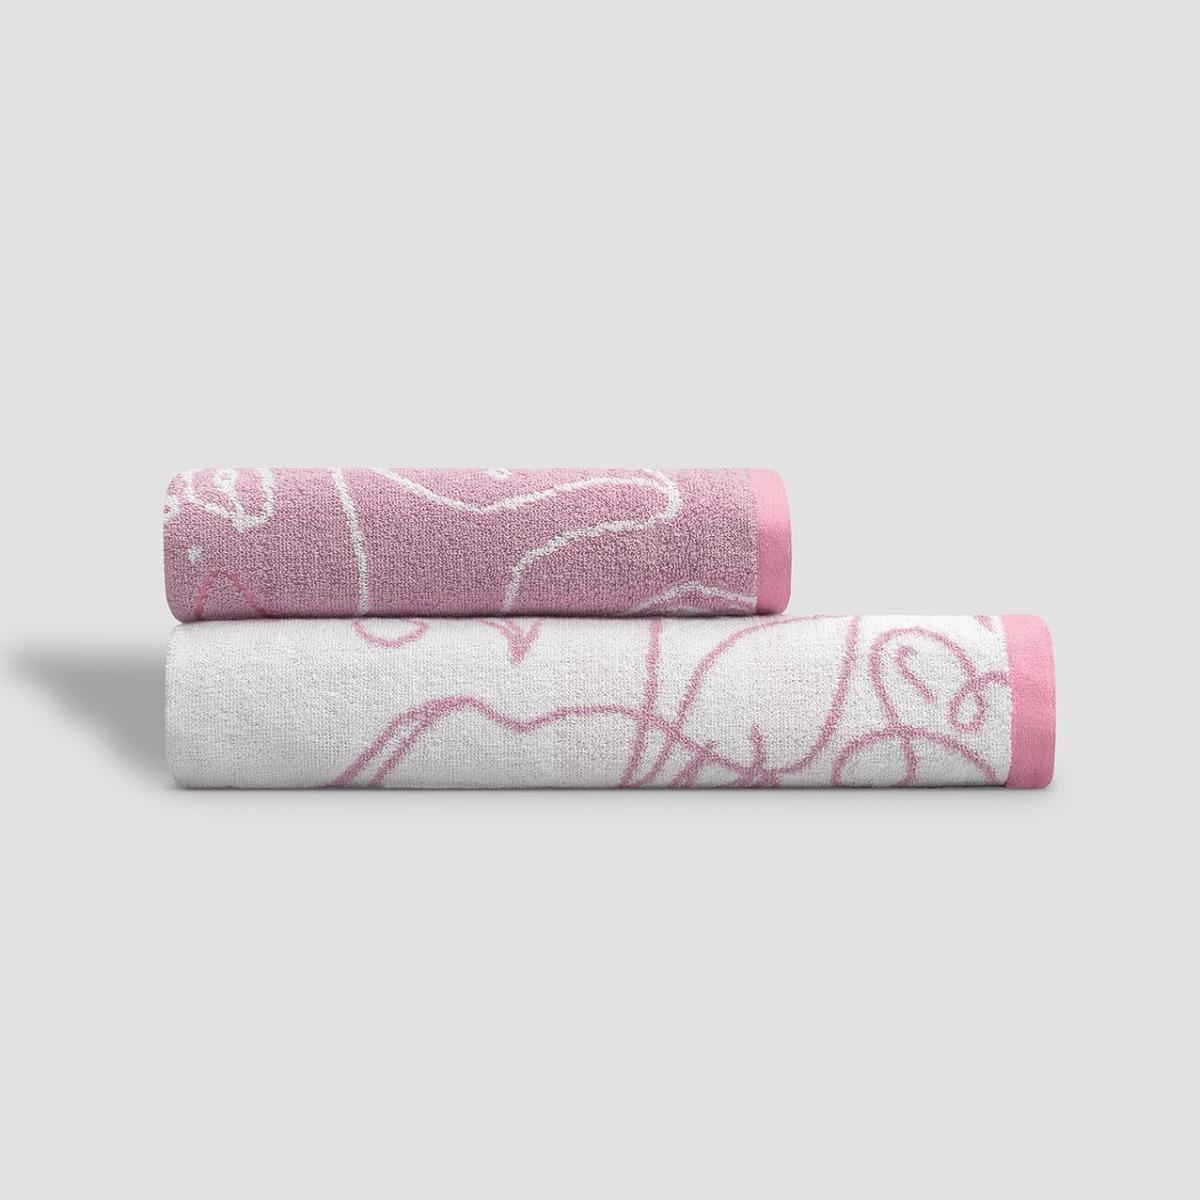 Полотенце Kids by Togas Кэрри белое с розовым 50х100 см полотенце togas аркадия нежный коралл 50х100